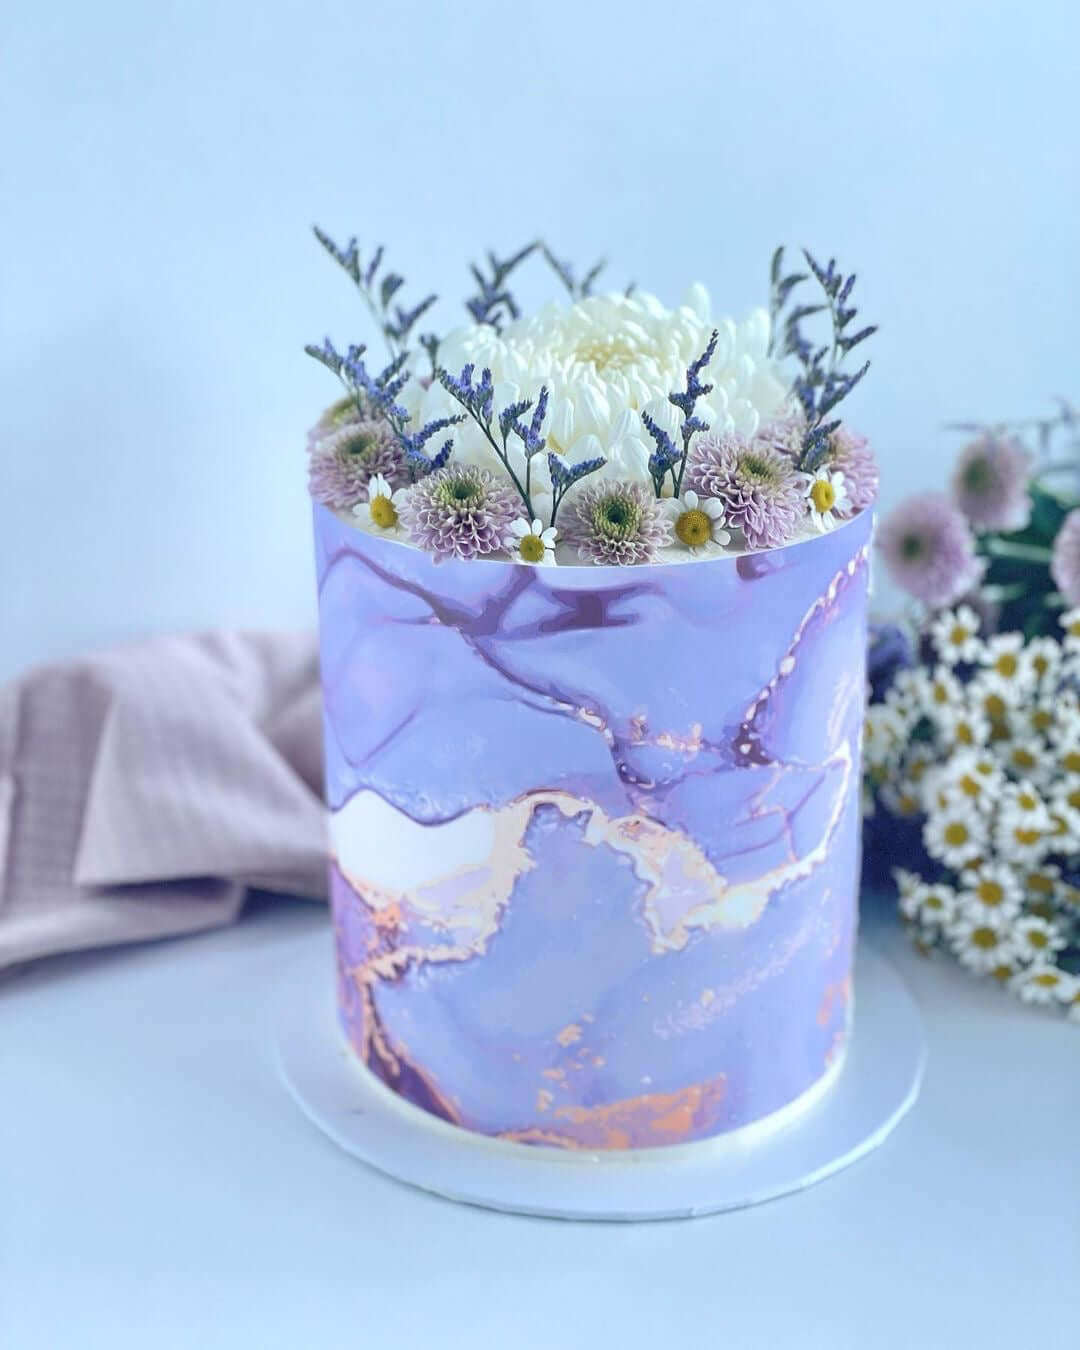 How To Make a Purple Marble Buttercream Fault Line Cake | Tutorial |  Kurlina's Foodie Chronicles - YouTube